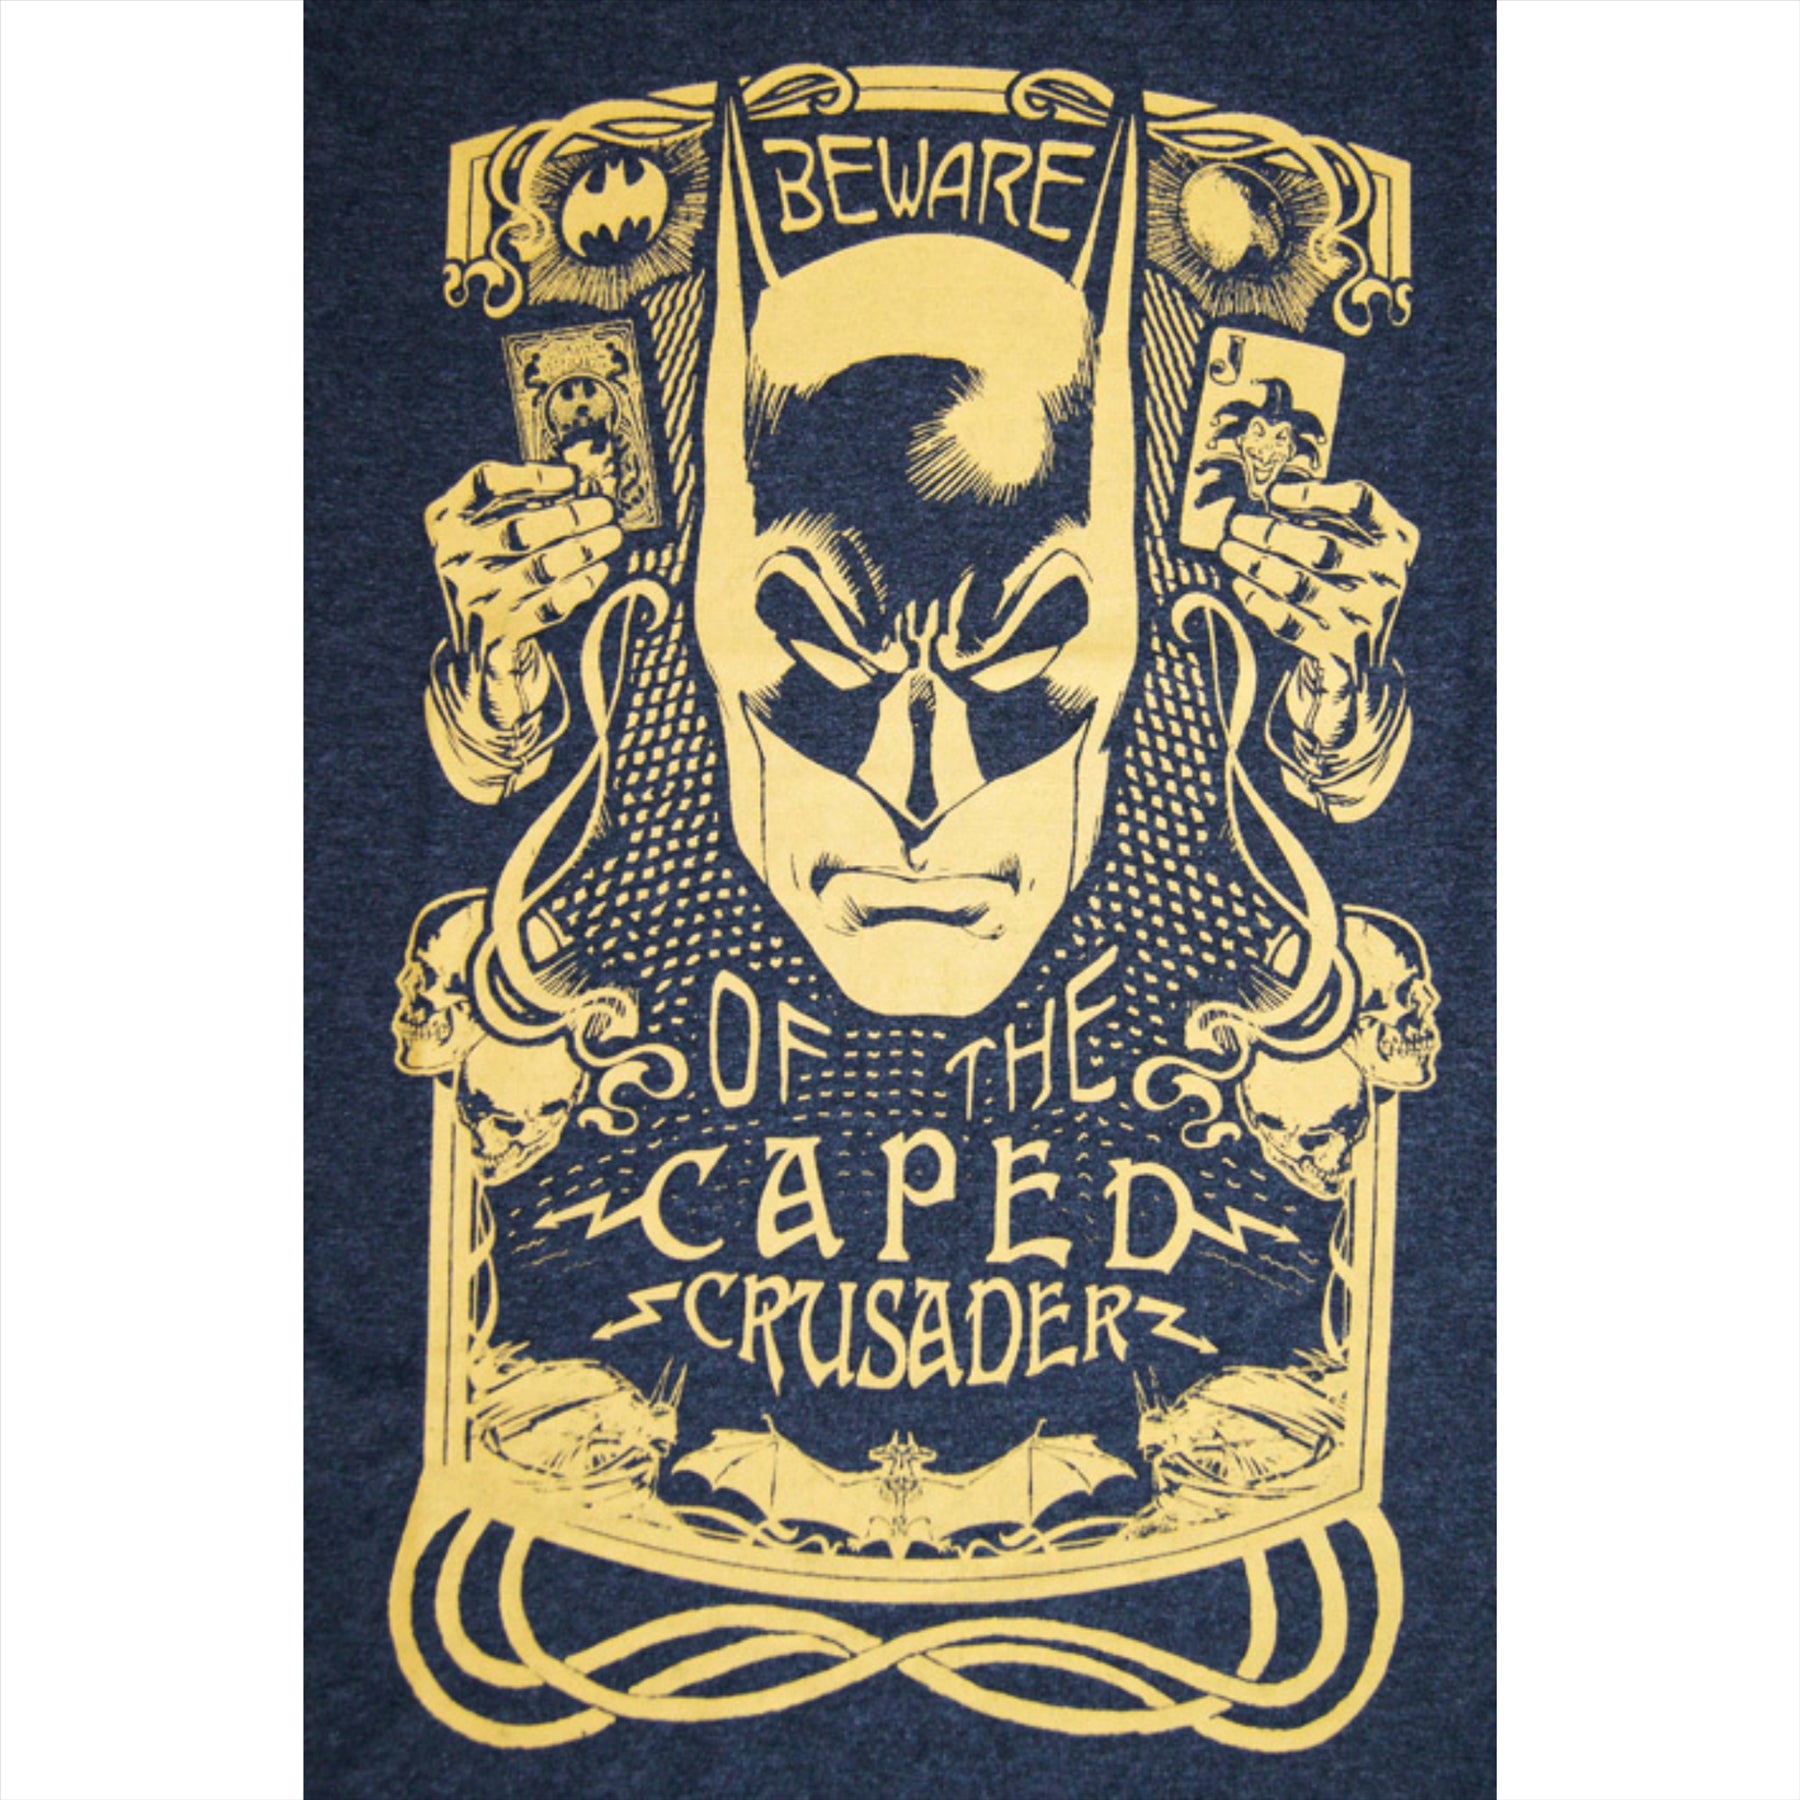 DC Comics Batman Caped Crusader Graphic T-Shirt - Extra Large - Toptoys2u